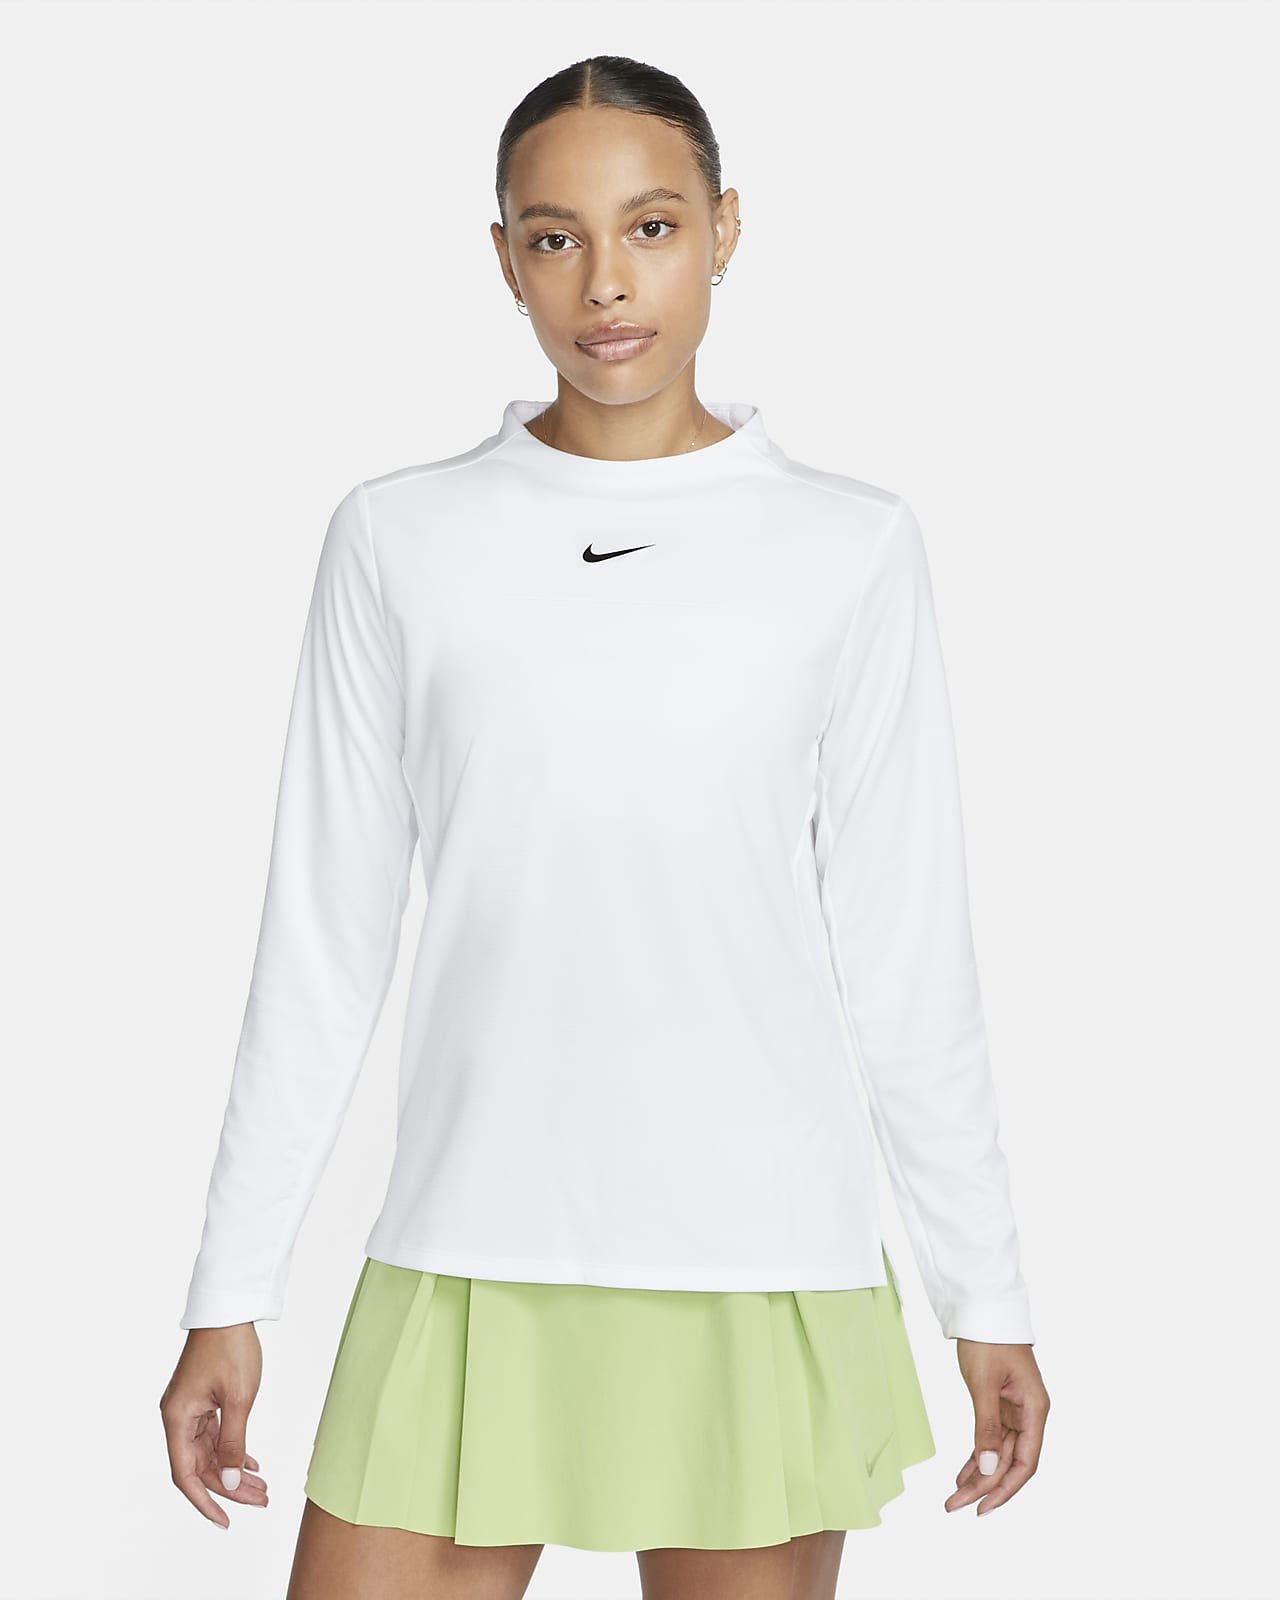 Mini-logo cropped mock-neck top, Nike, Running Tops